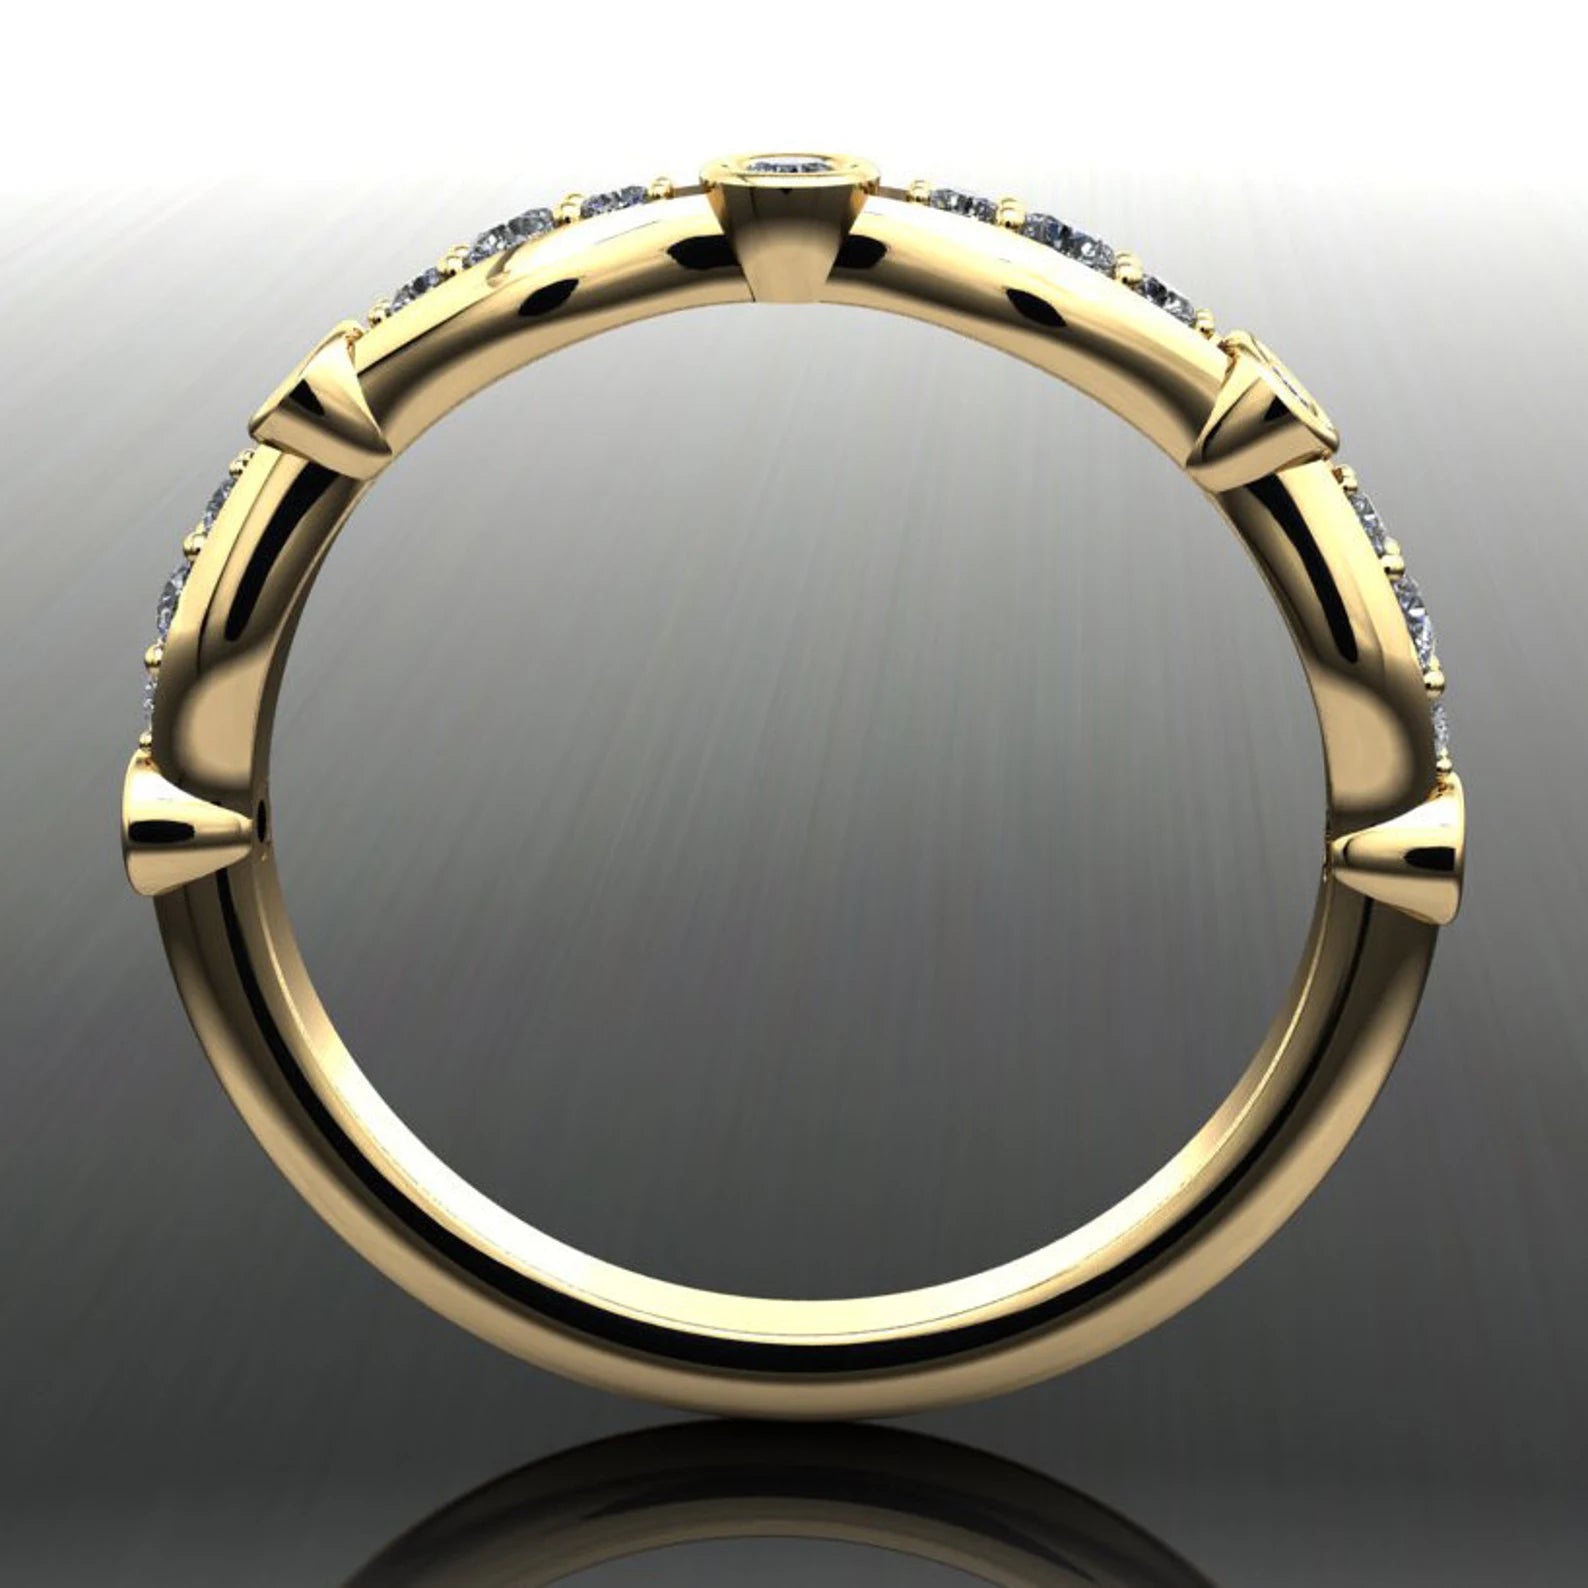 amelia stacking ring - vintage style diamond ring, stacking band - J Hollywood Designs